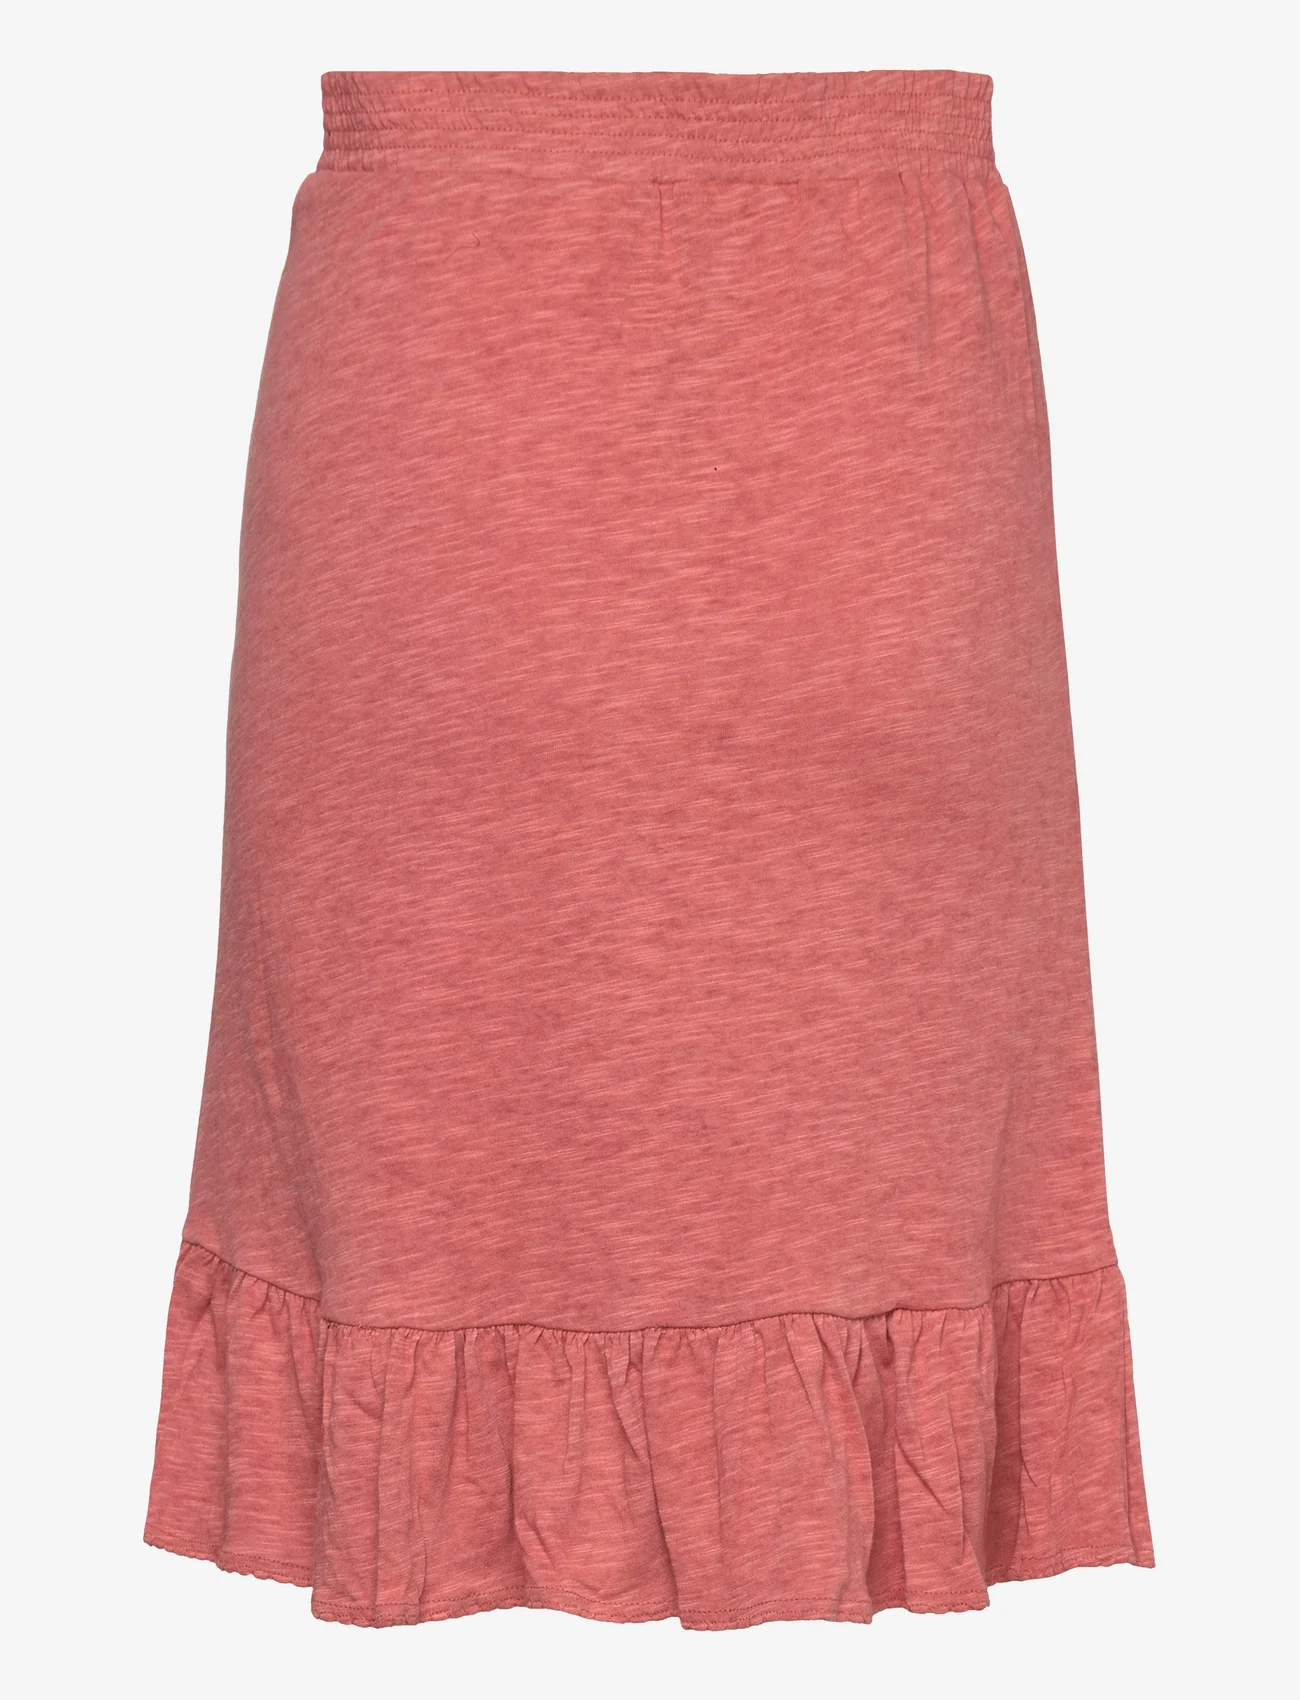 ODD MOLLY - Lucille Skirt - short skirts - vintage pink - 1